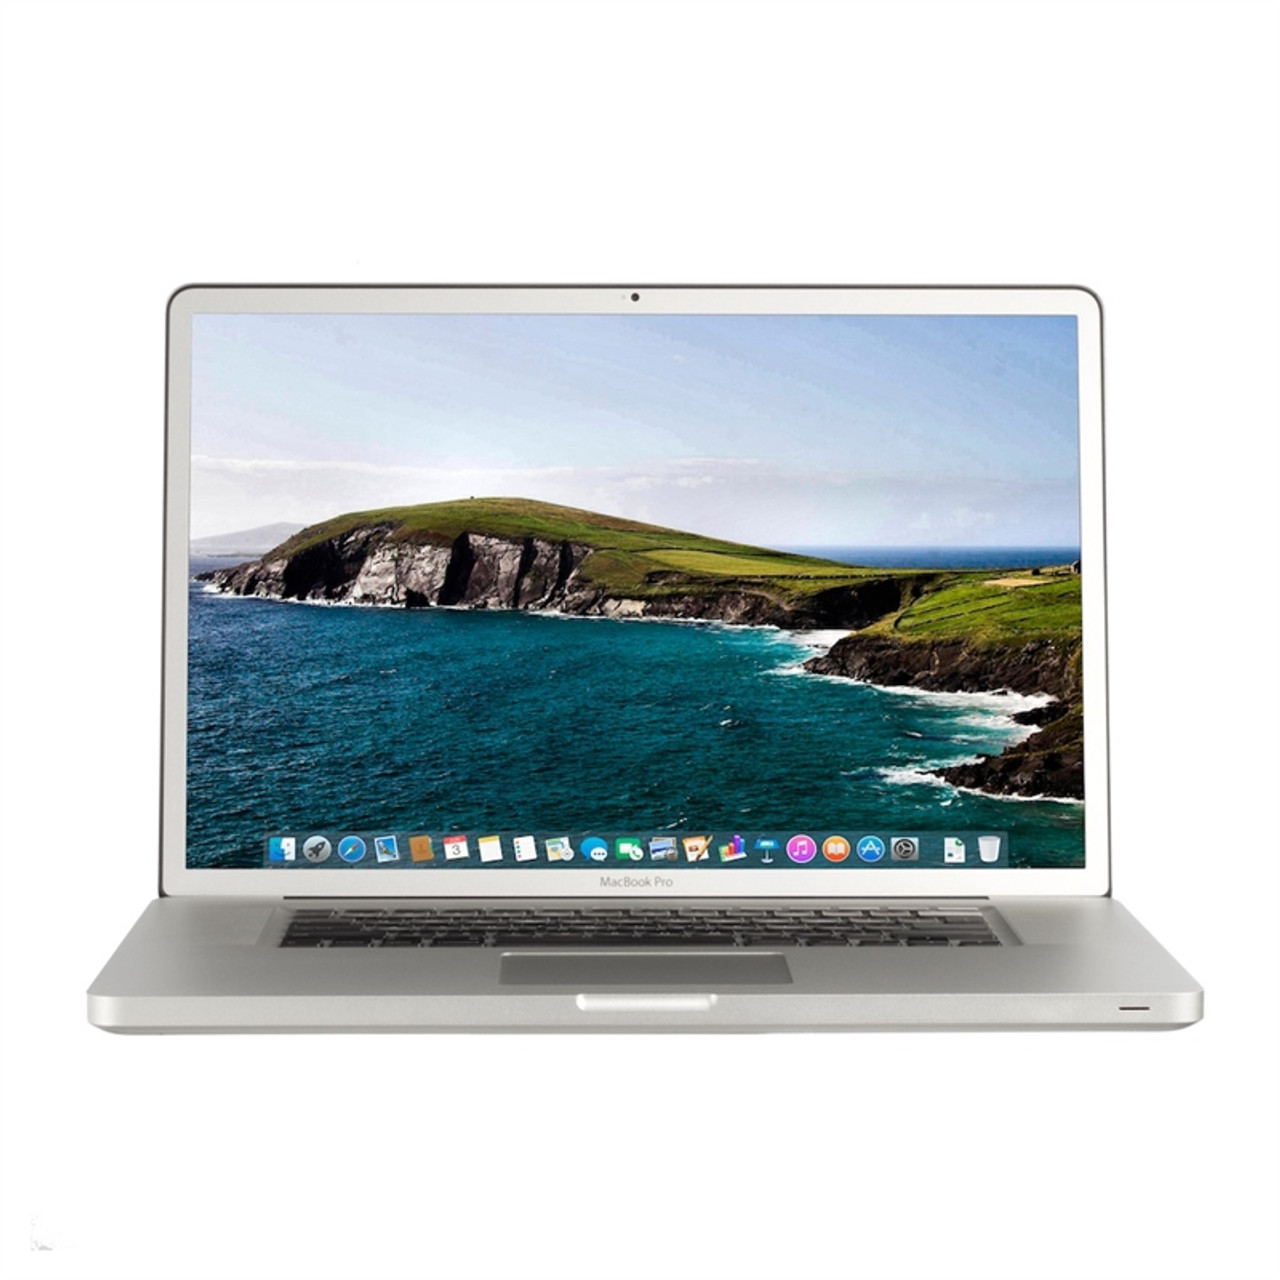  Apple MacBook Pro 17-inch (Late 2011) Notebook